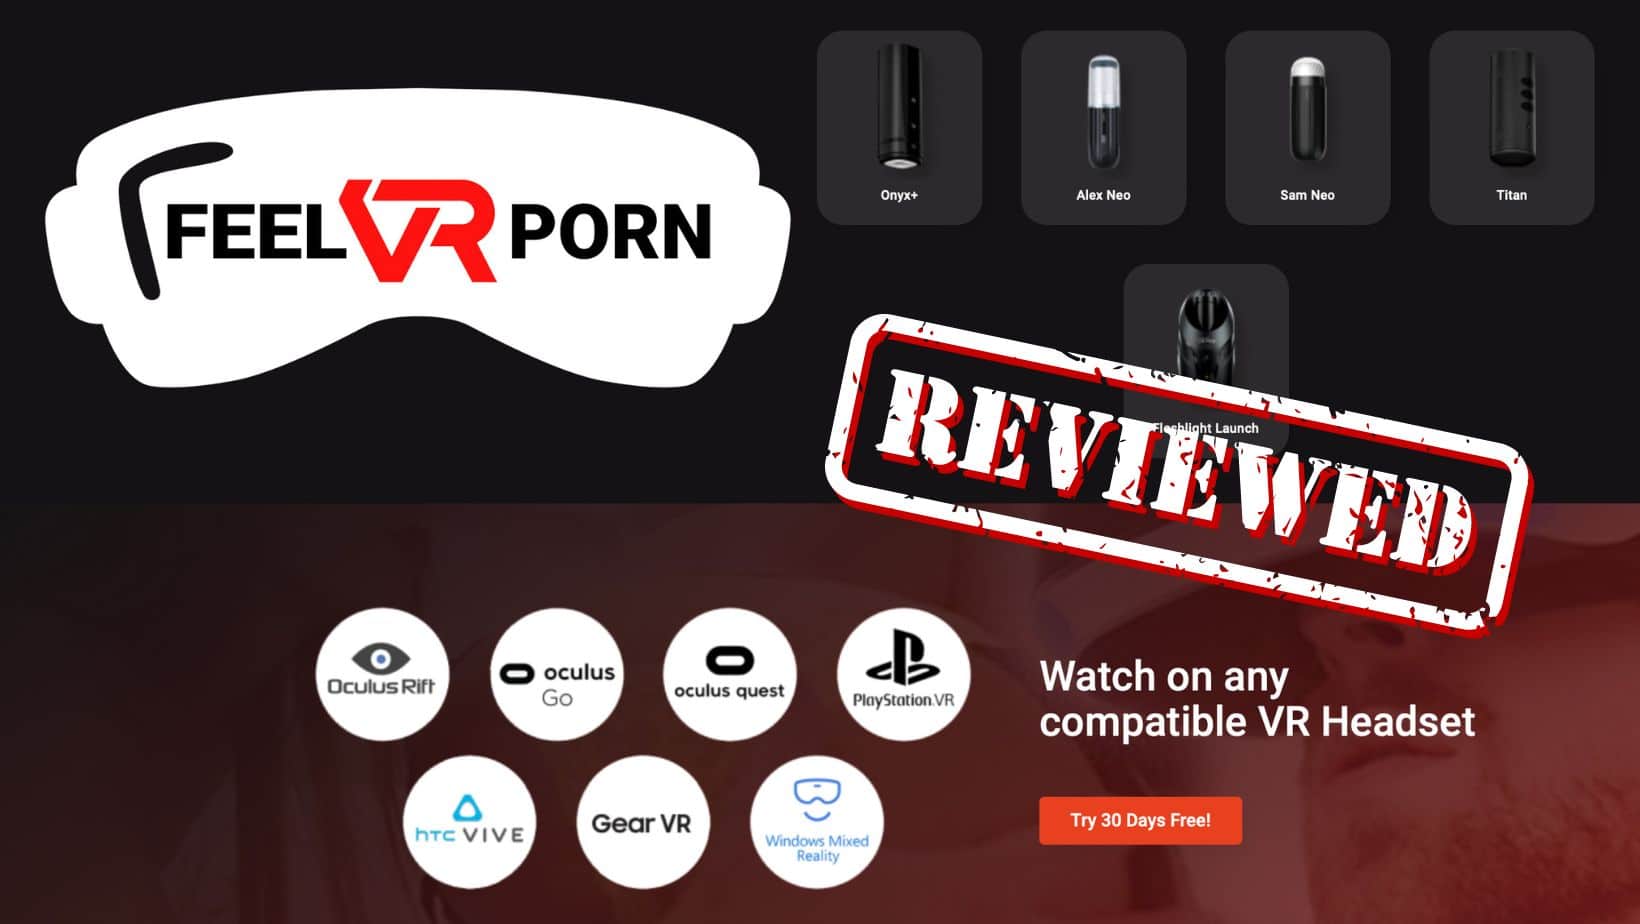 Feel VR Porn Review – Is It a LEGIT Website?